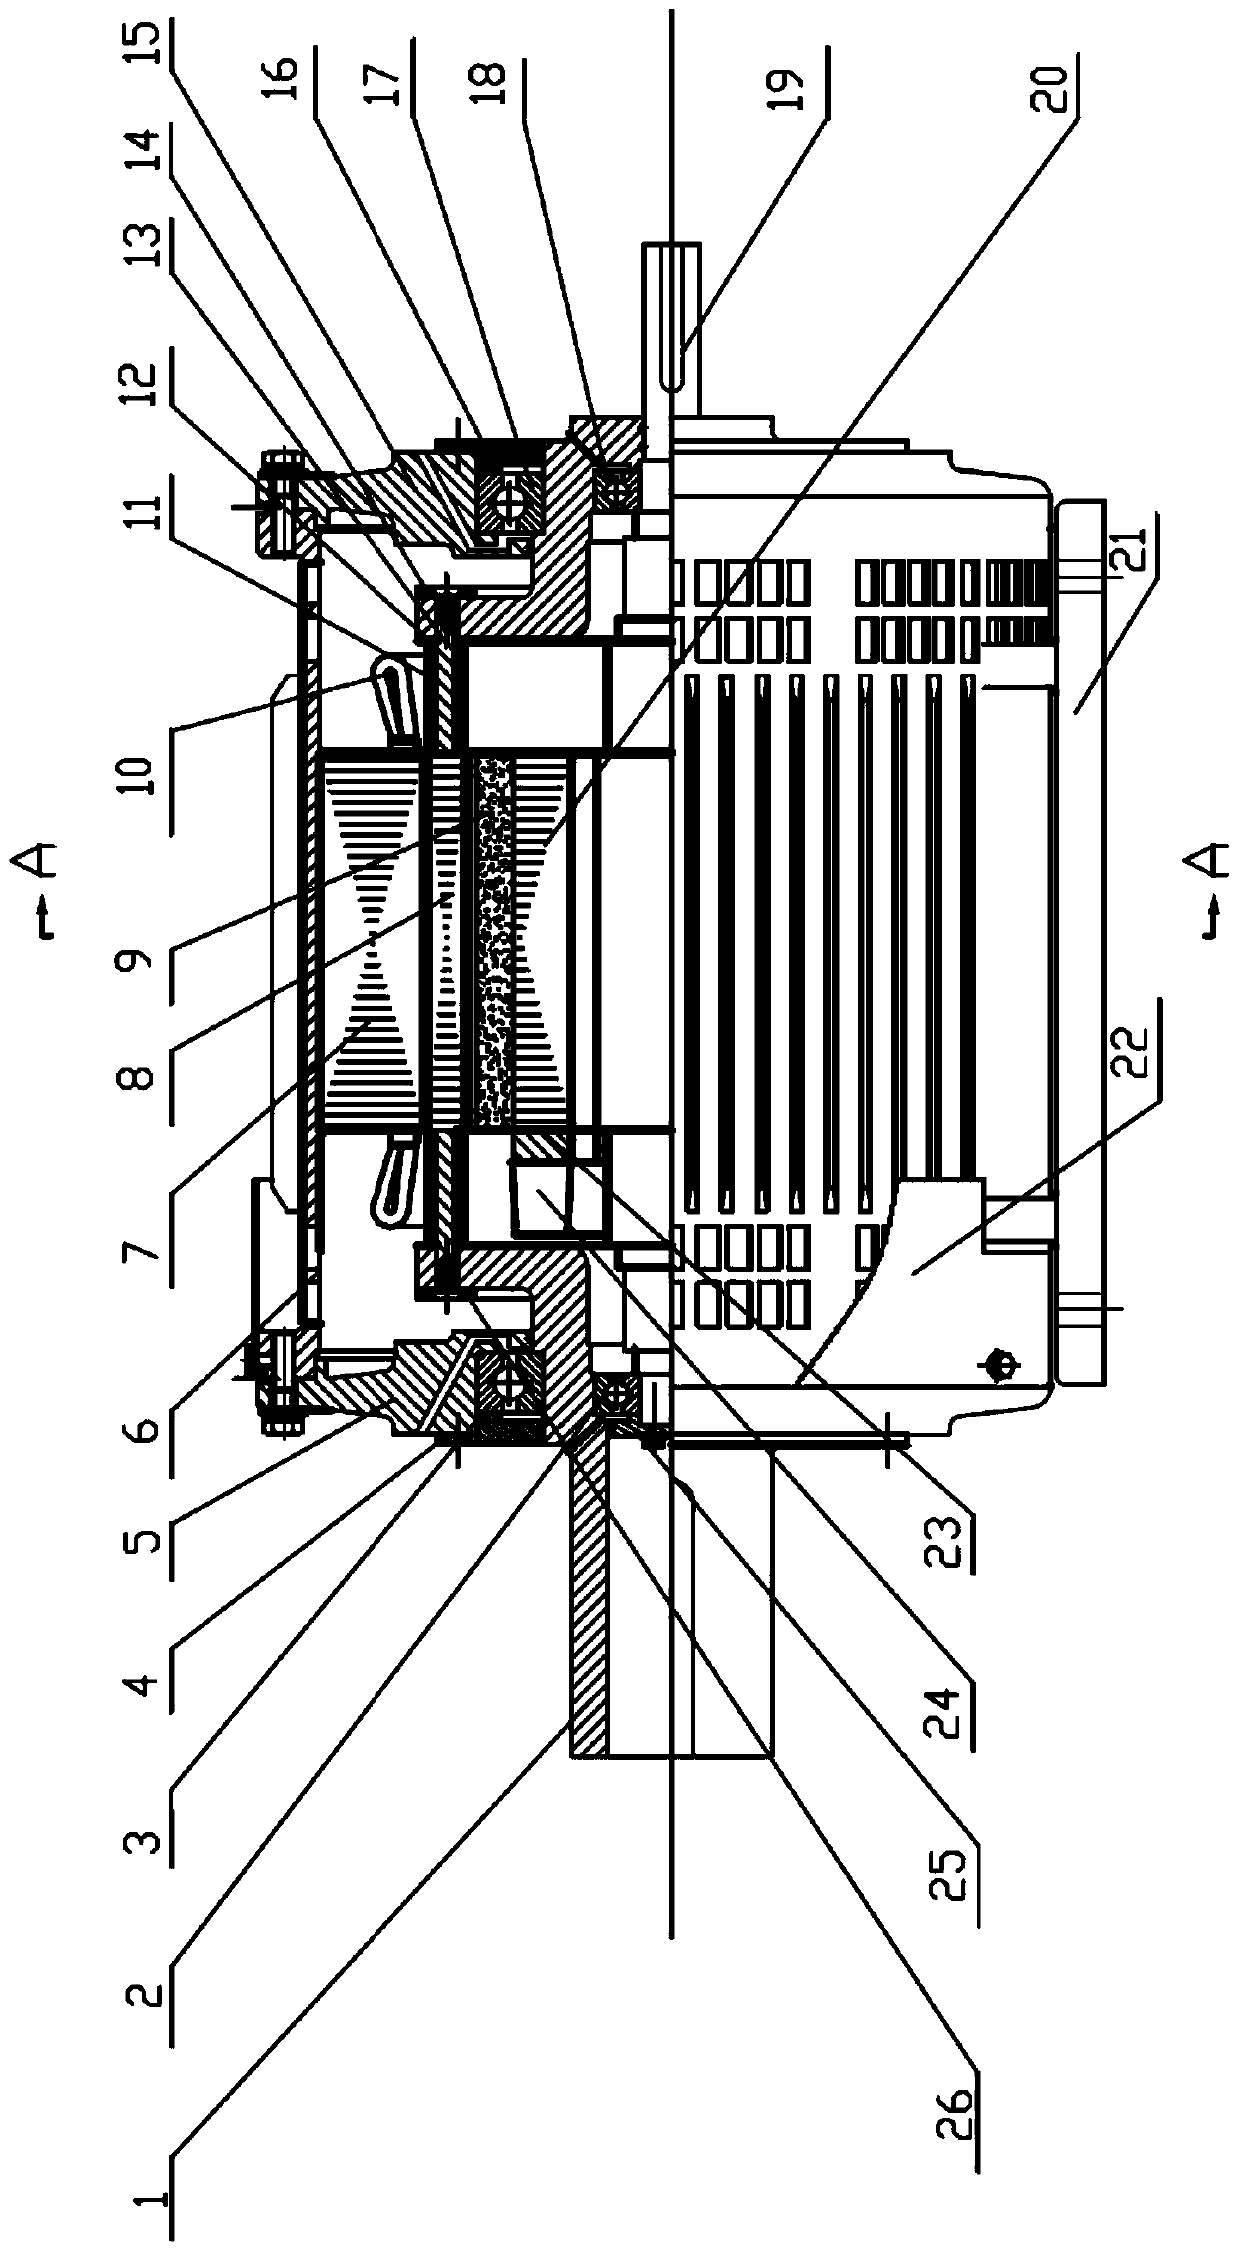 A permanent magnet gear transmission